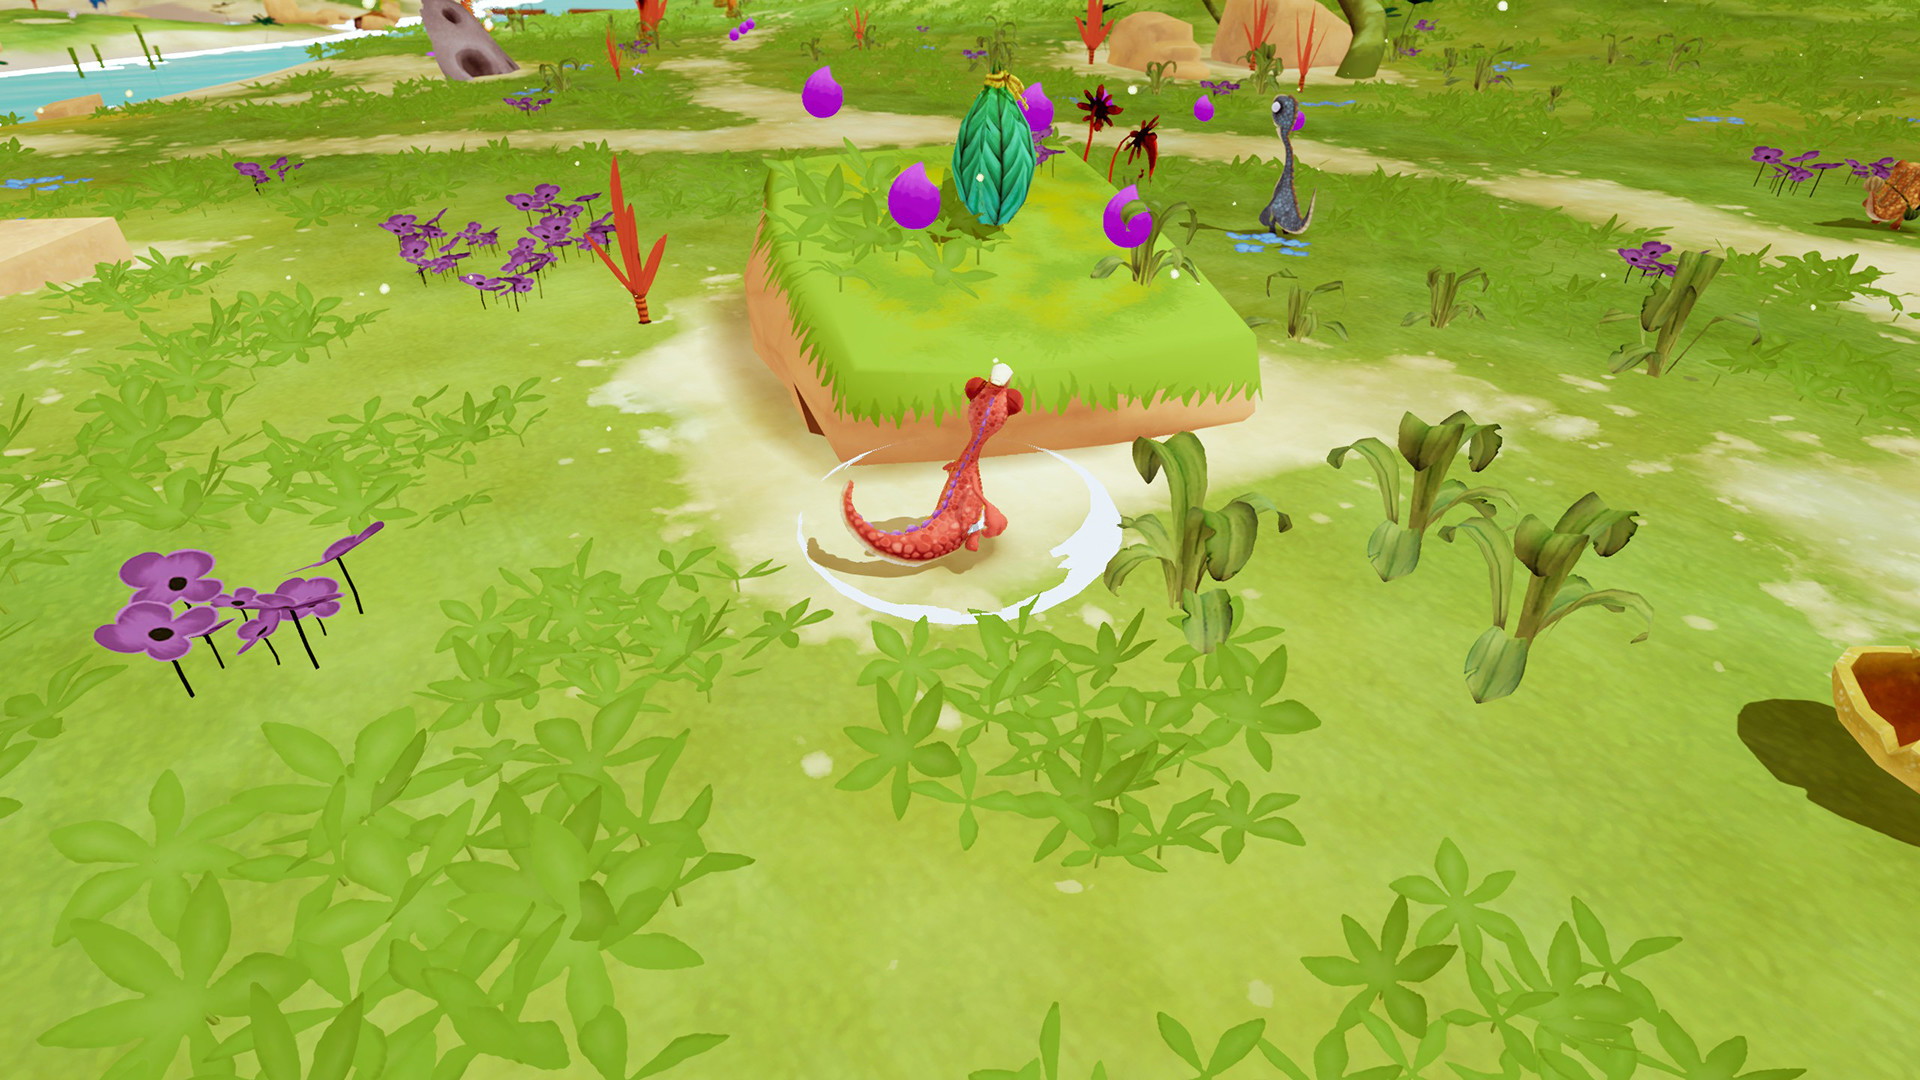 Gigantosaurus: The Game - screenshot 4